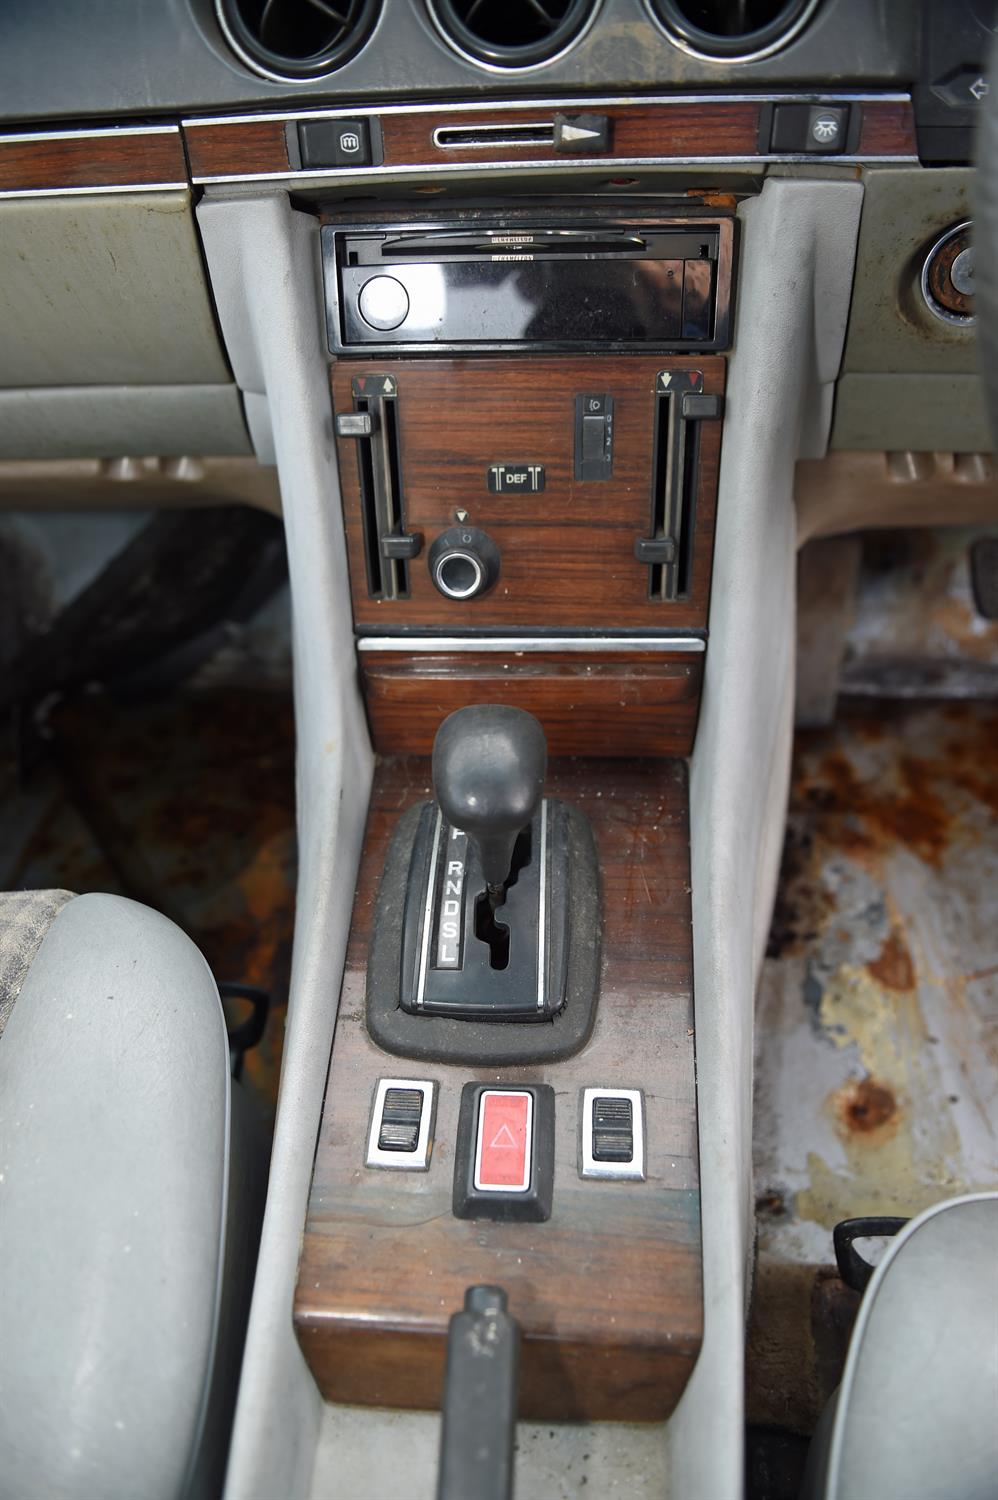 1981 Mercedes 380 SL R107 Automatic Petrol Convertible. Registration number: 4925 LJ. - Image 9 of 14